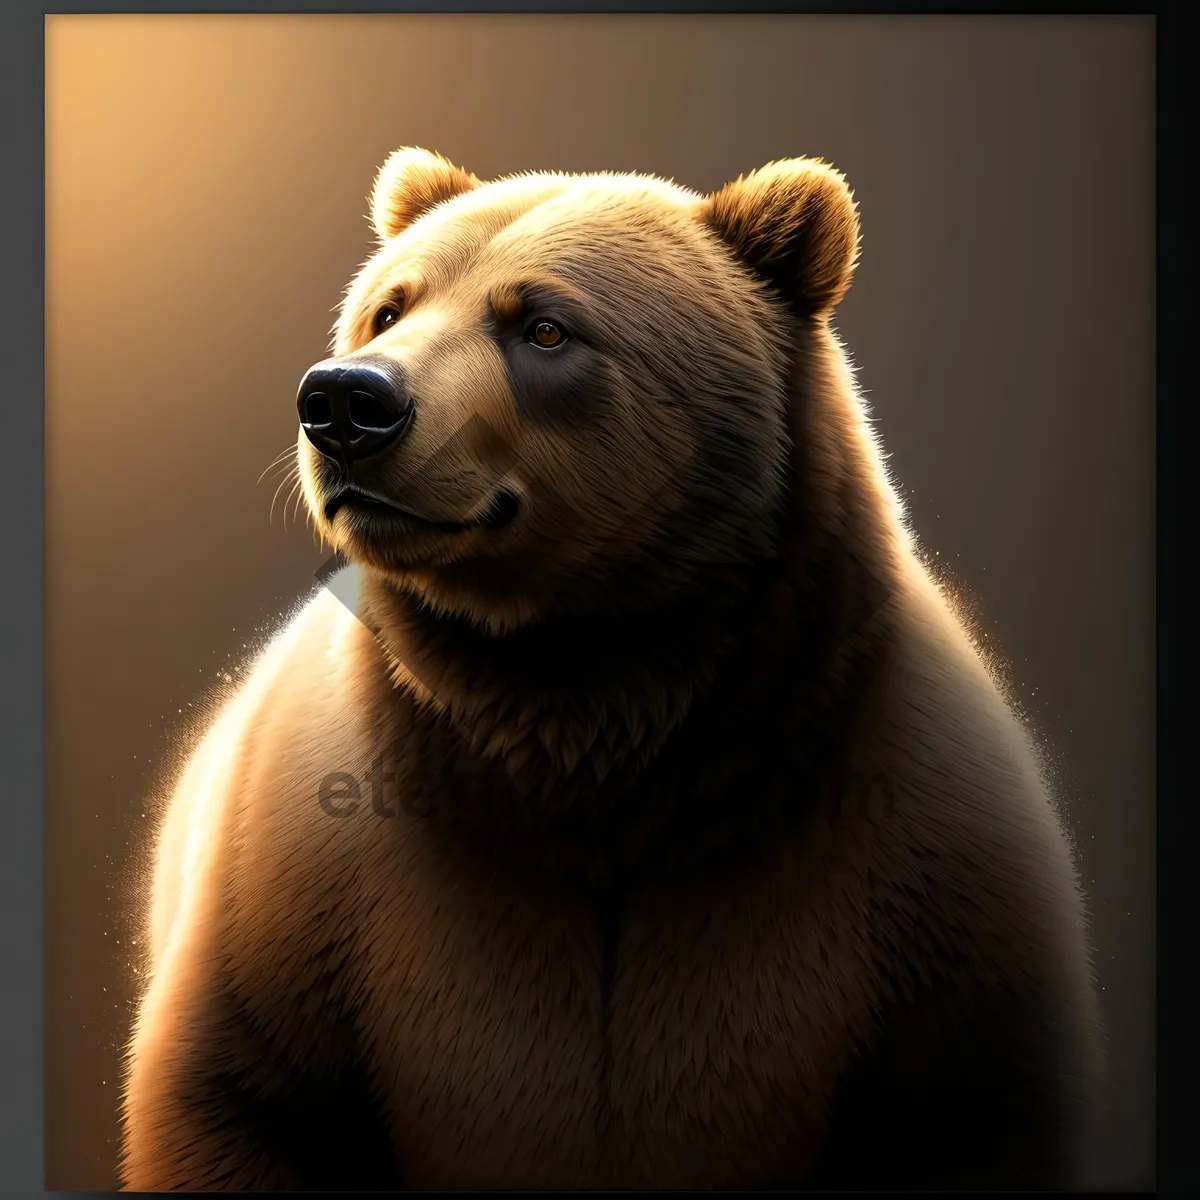 Picture of Cute Brown Bear in Wildlife Habitat